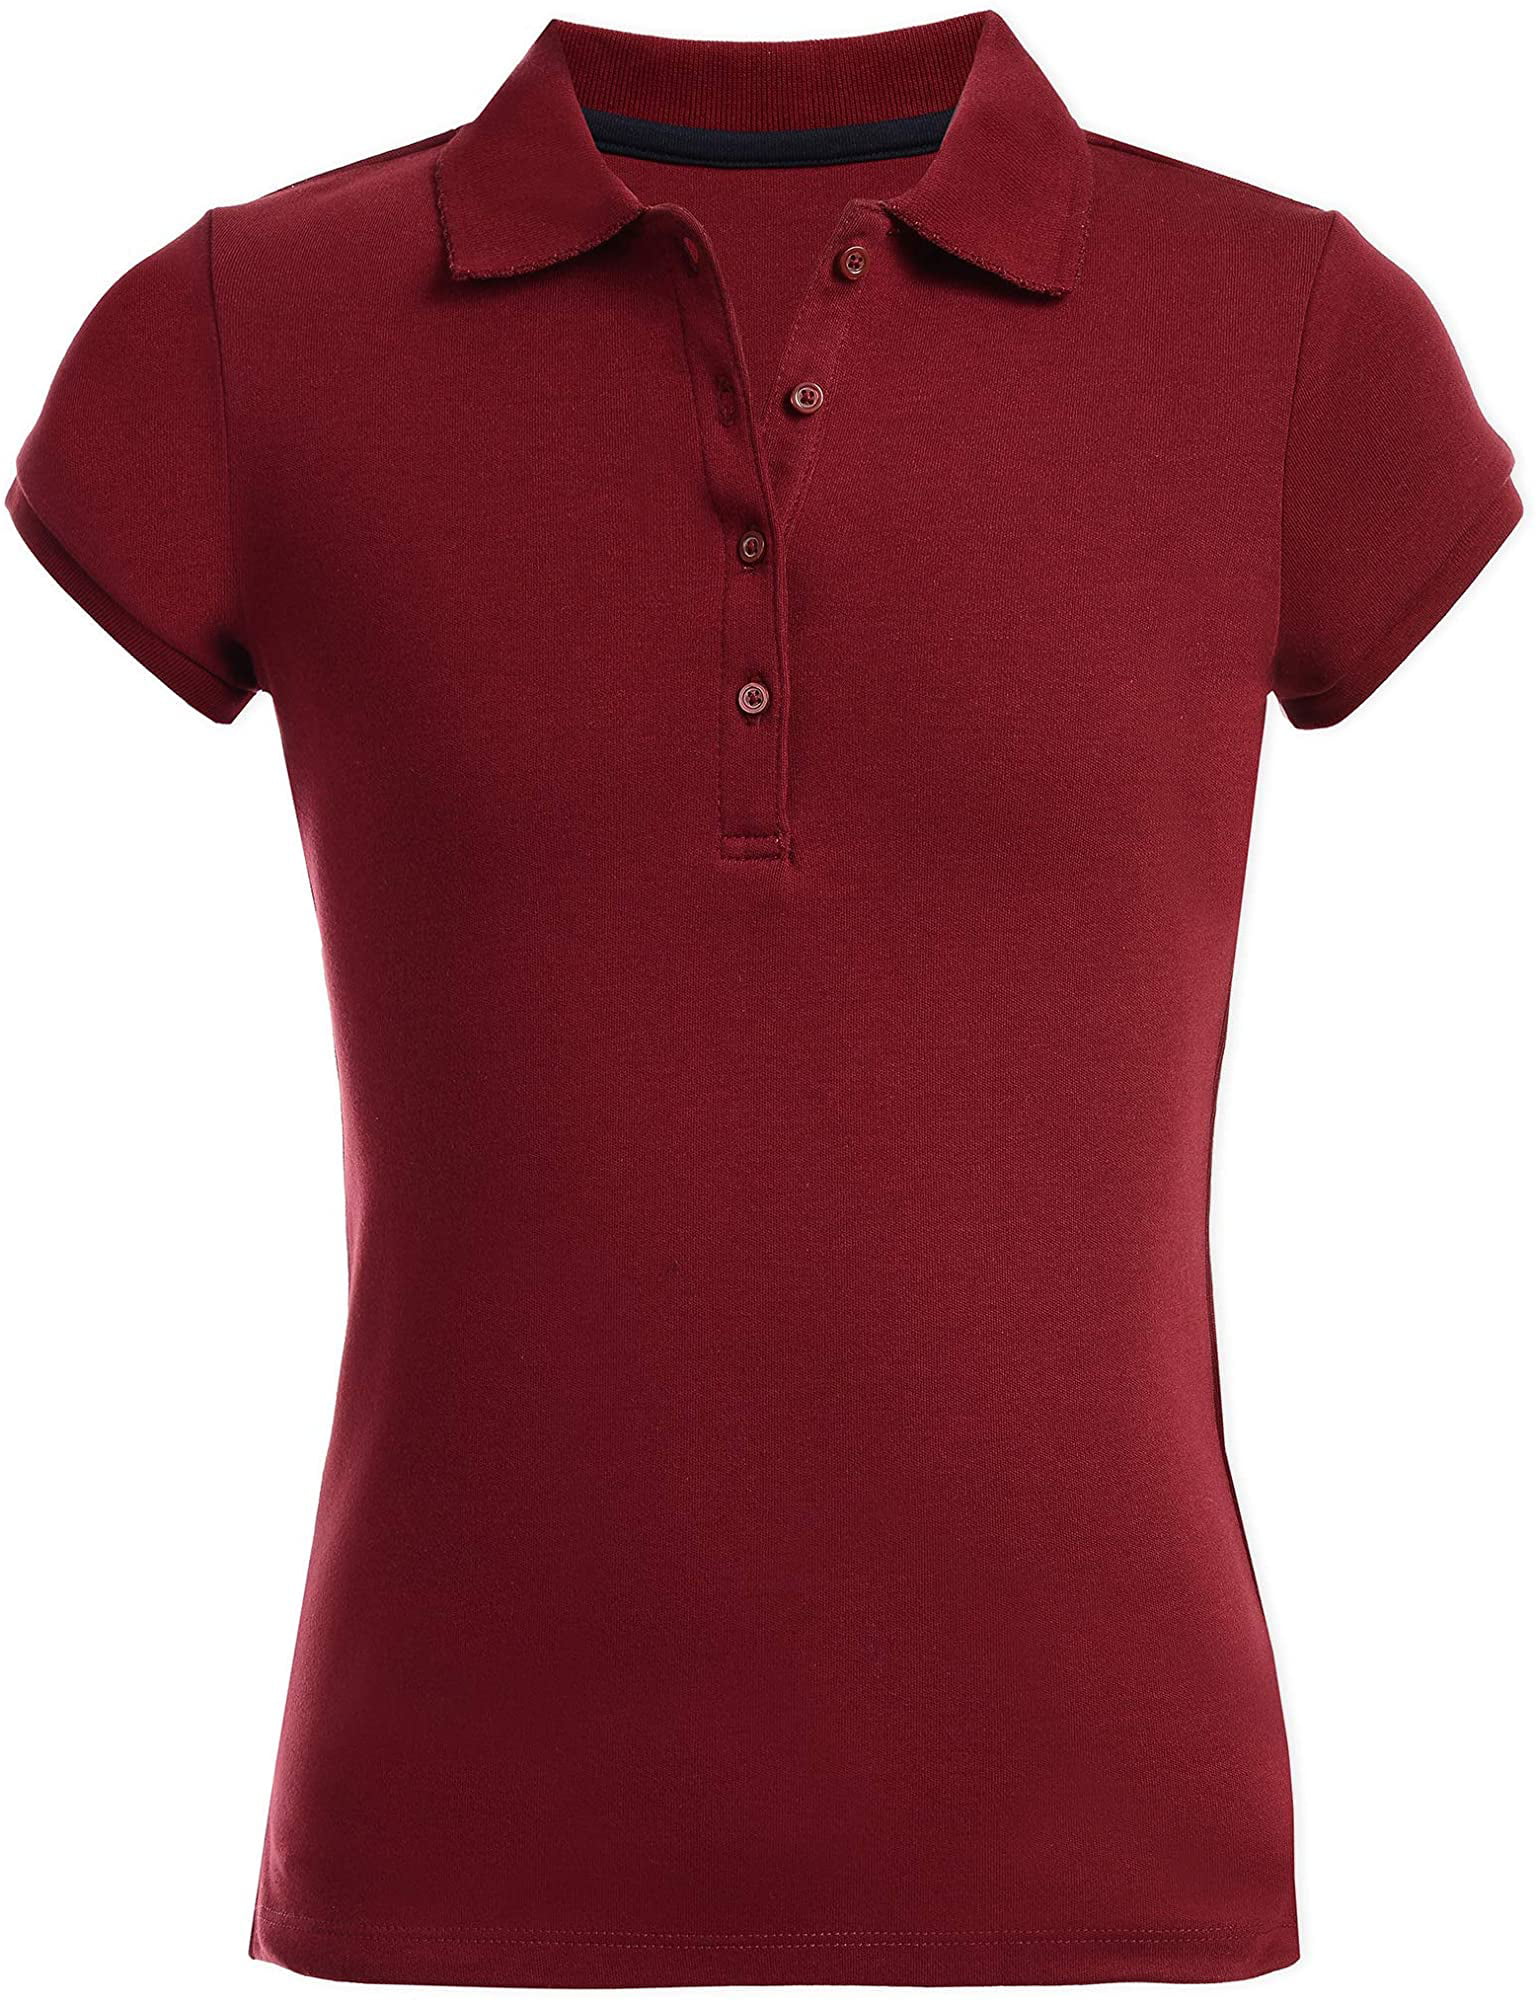 Nautica Girls Uniform Short Sleeve Polo with Picot Stitch Collar School Uniform Polo Shirt